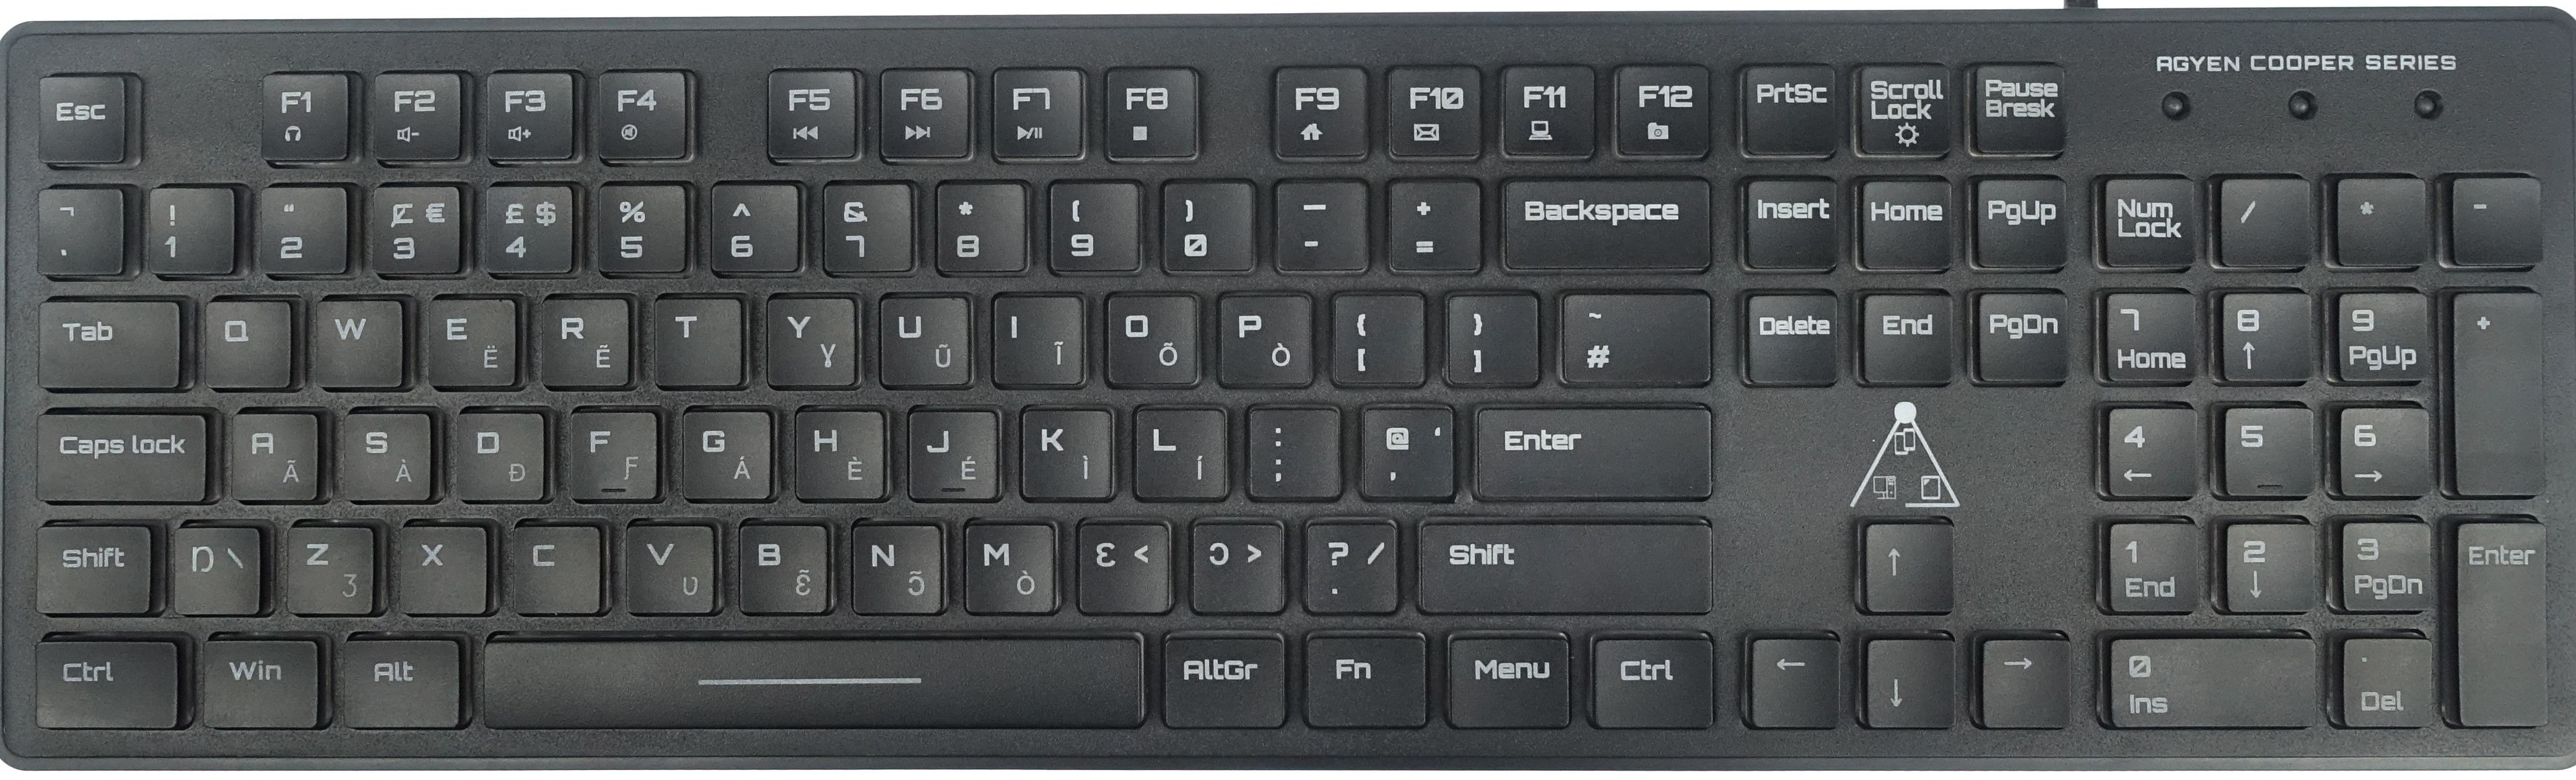 ABƐD Desktop Keyboard Brand GH>